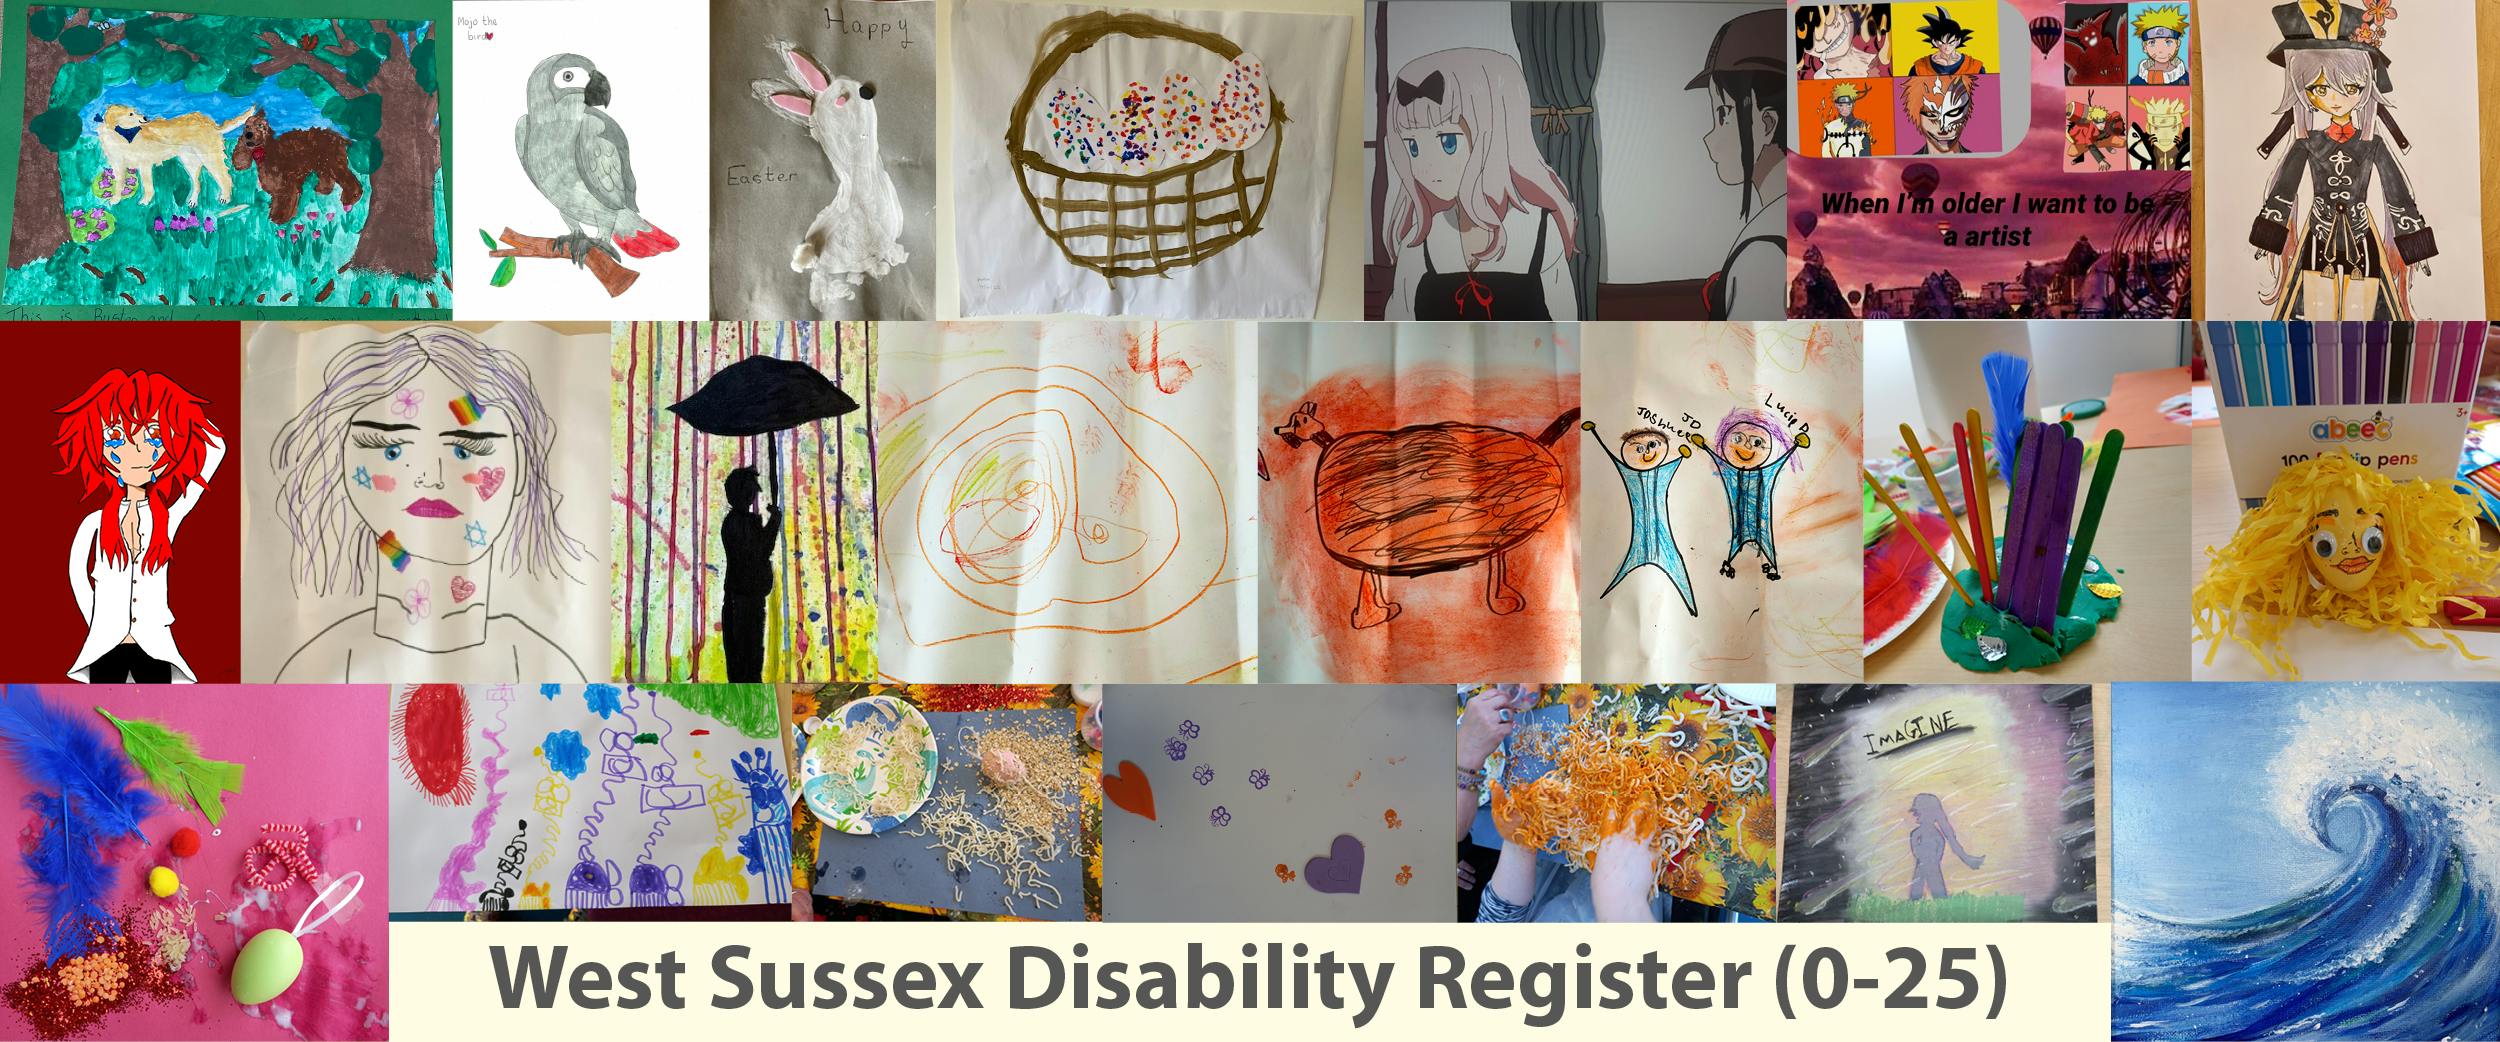 West Sussex Disability Register 0-25. 